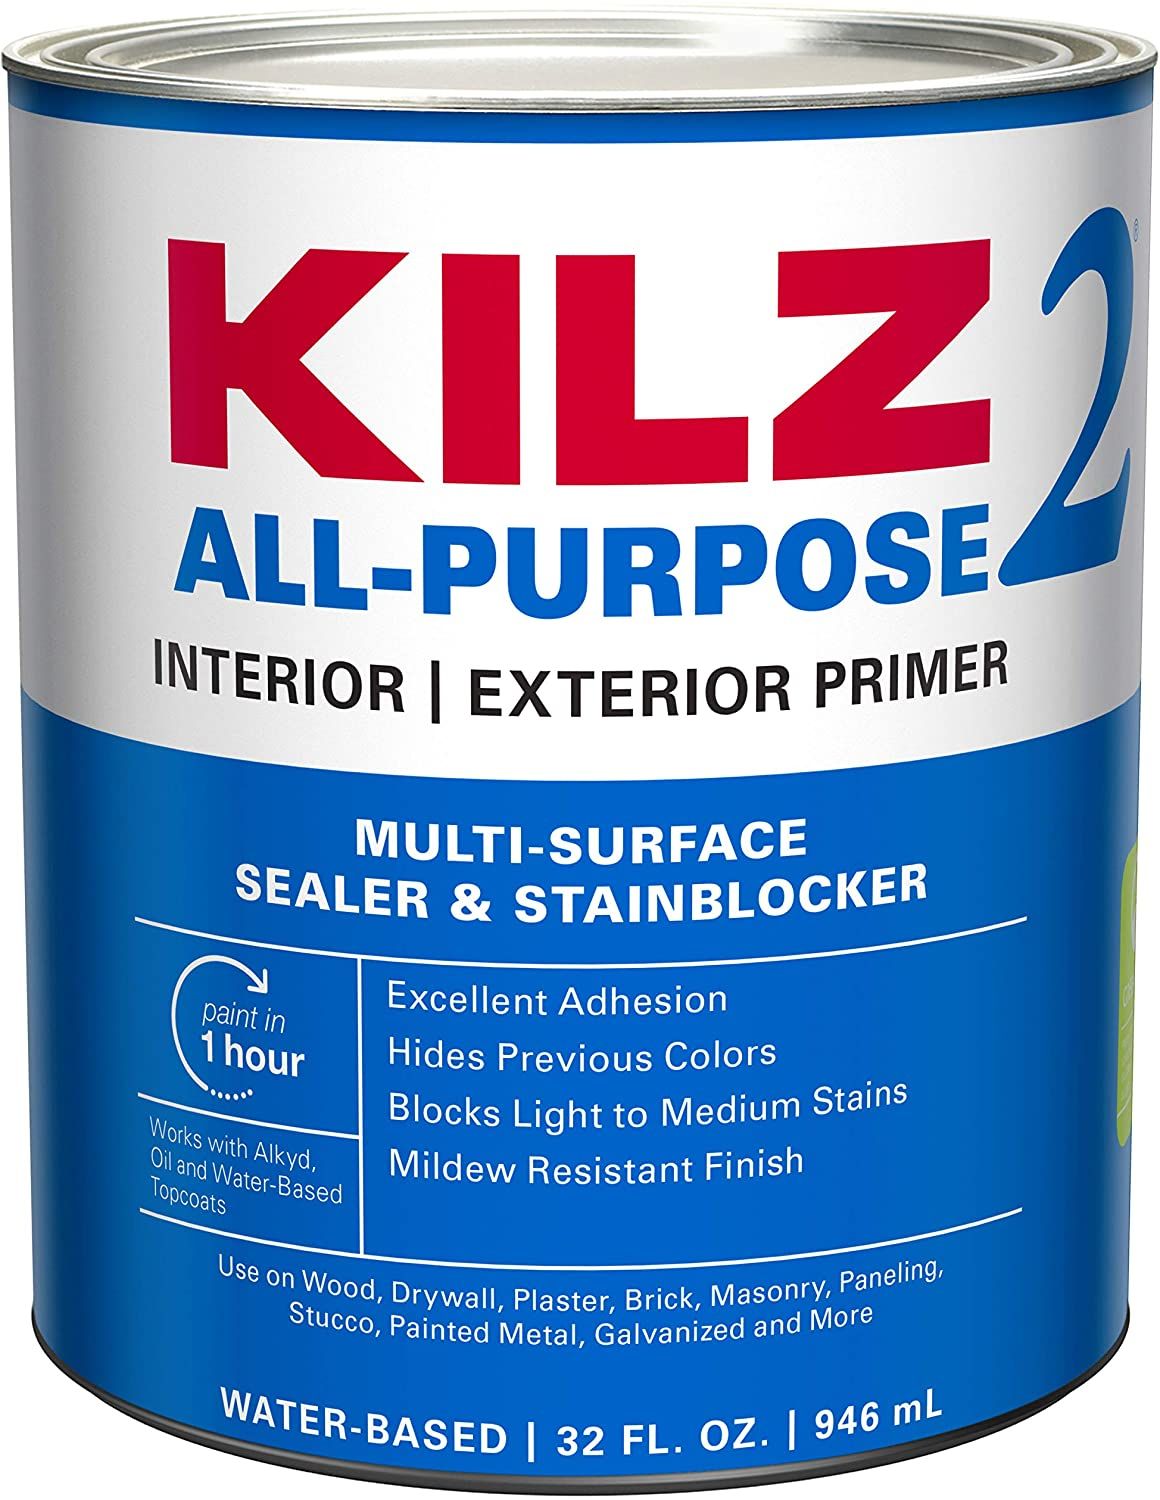 KILZ 2 All-Purpose Interior/Exterior Primer Can